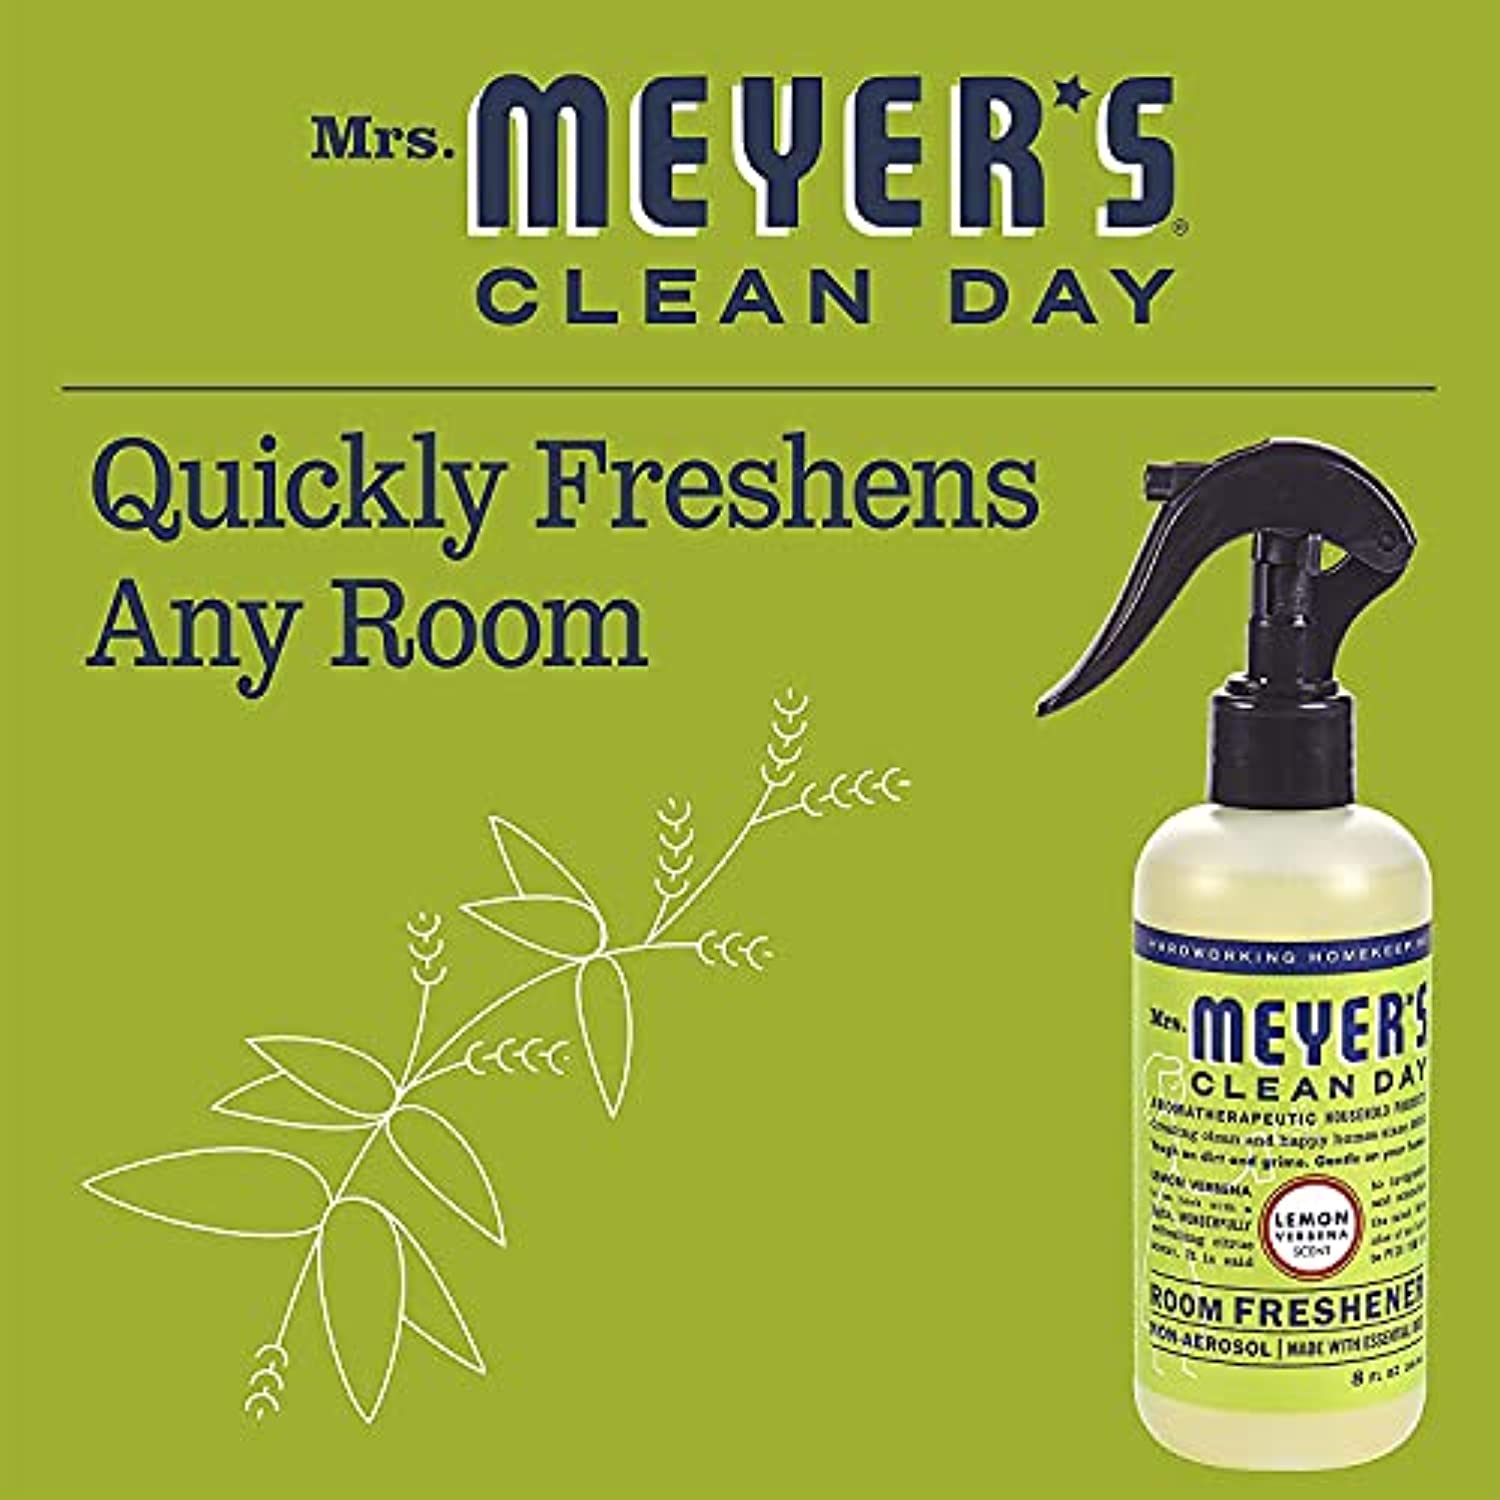 Mrs. Meyer’s Clean Day Room Freshener Spray, Lemon Verbena Scent, Instant & Refreshing Fragrance Made with Essential Oils, 8 fl oz Spray Bottle (Pack of 1)